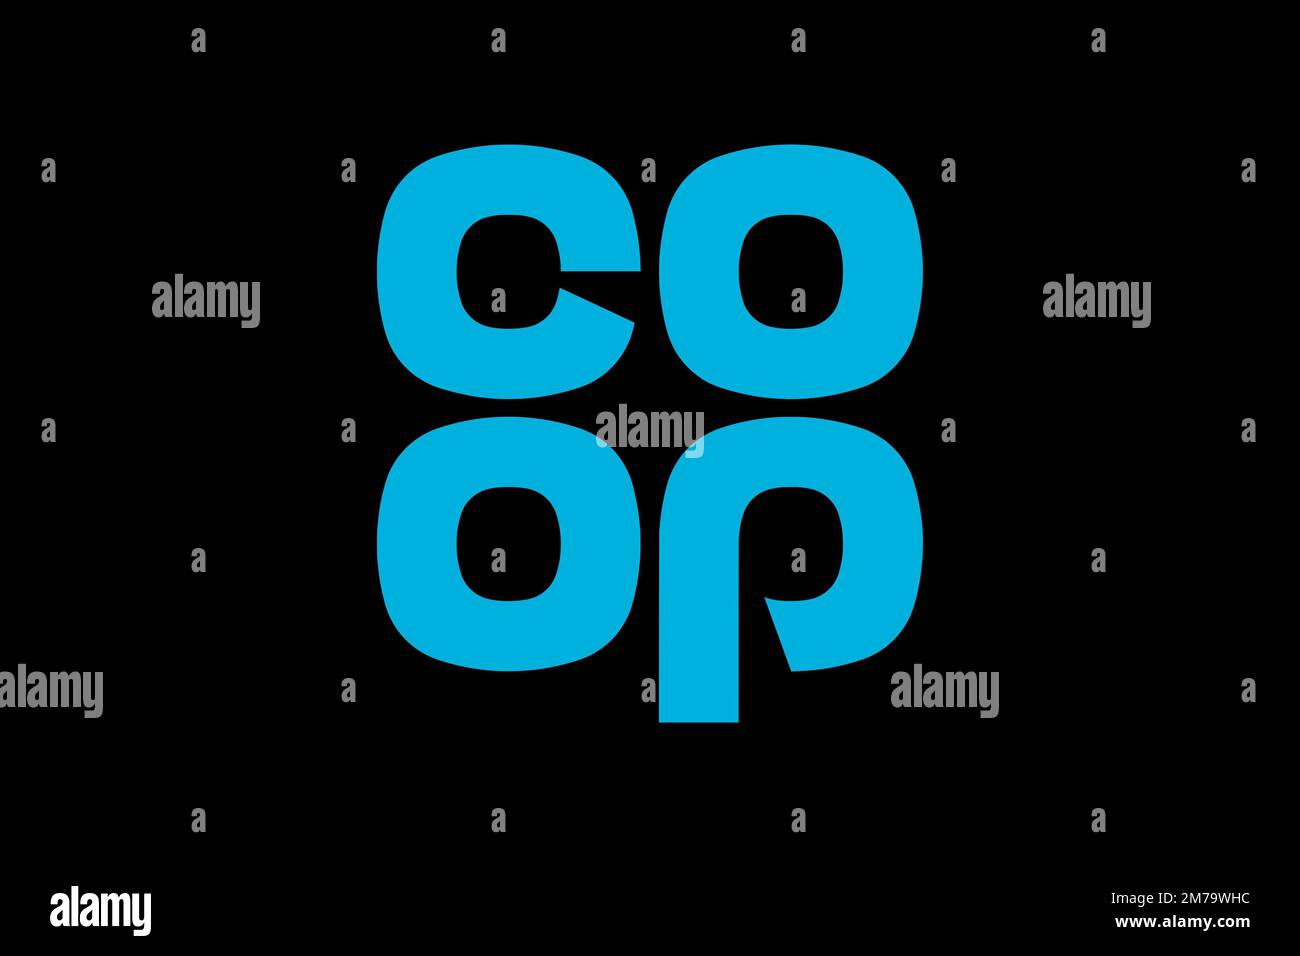 Co op Food, Logo, Black background Stock Photo